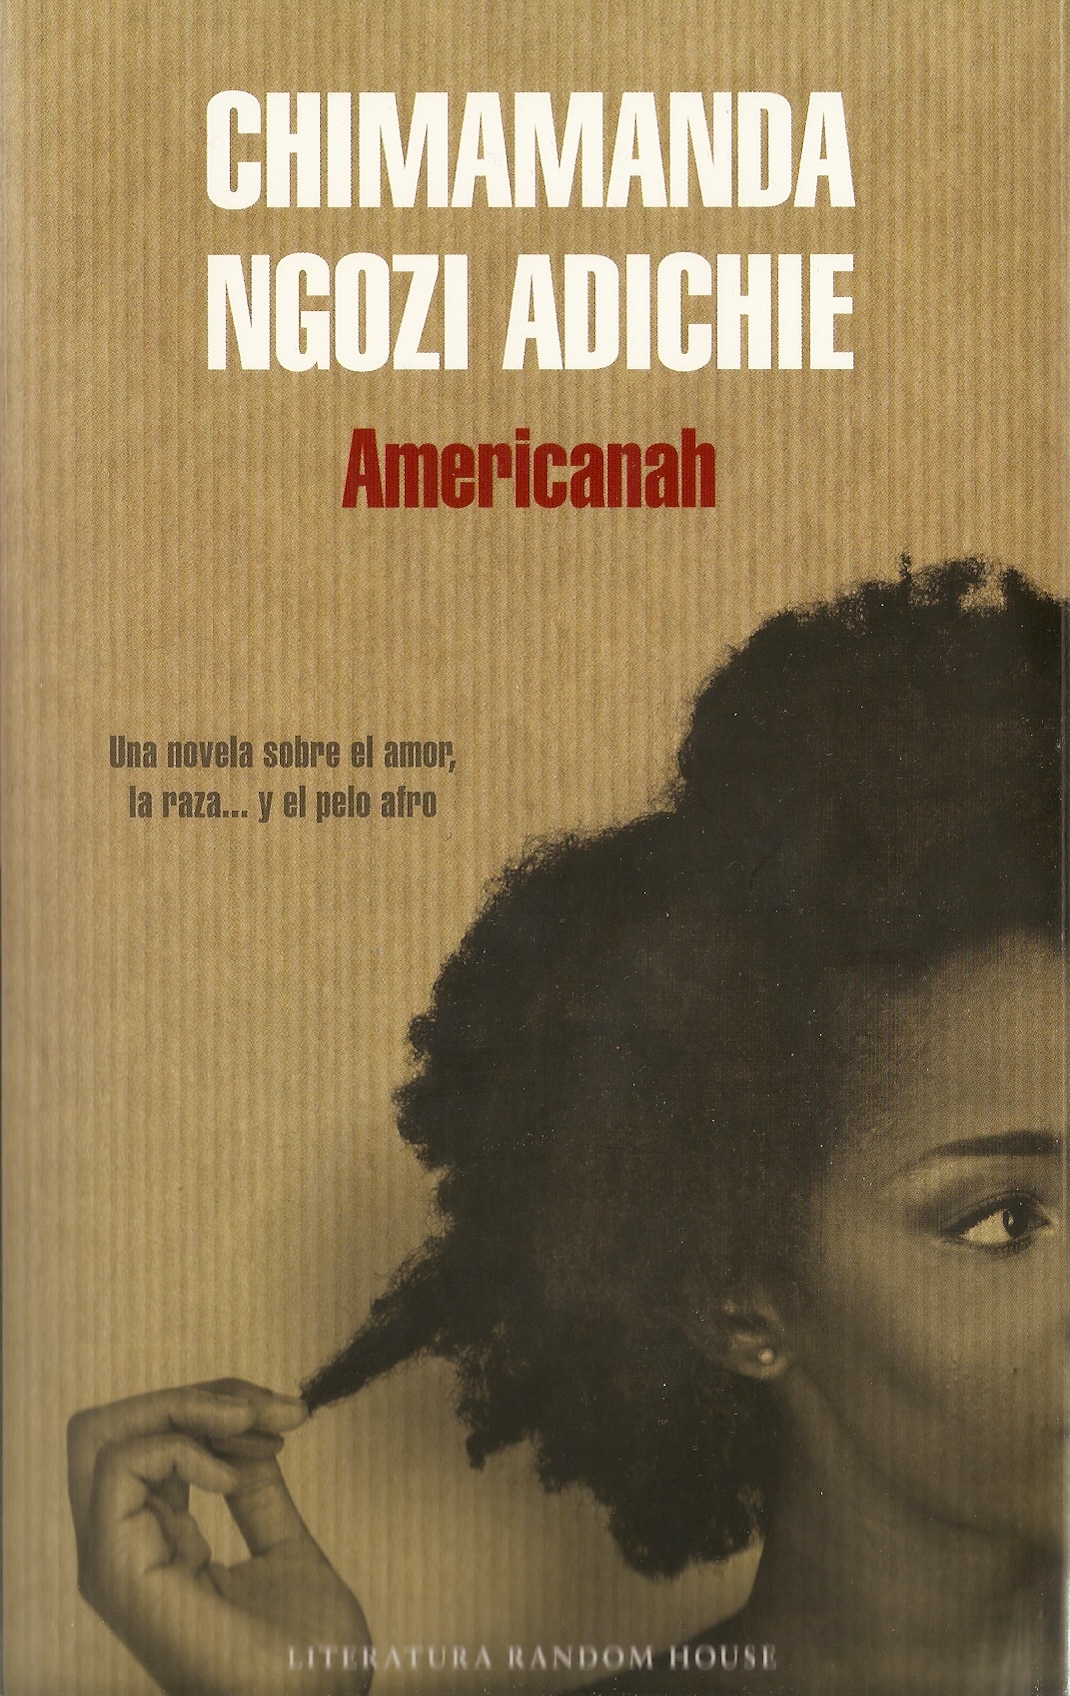 escanear0051 - Americanah (Chimamanda Ngozi Adichie, 2013)